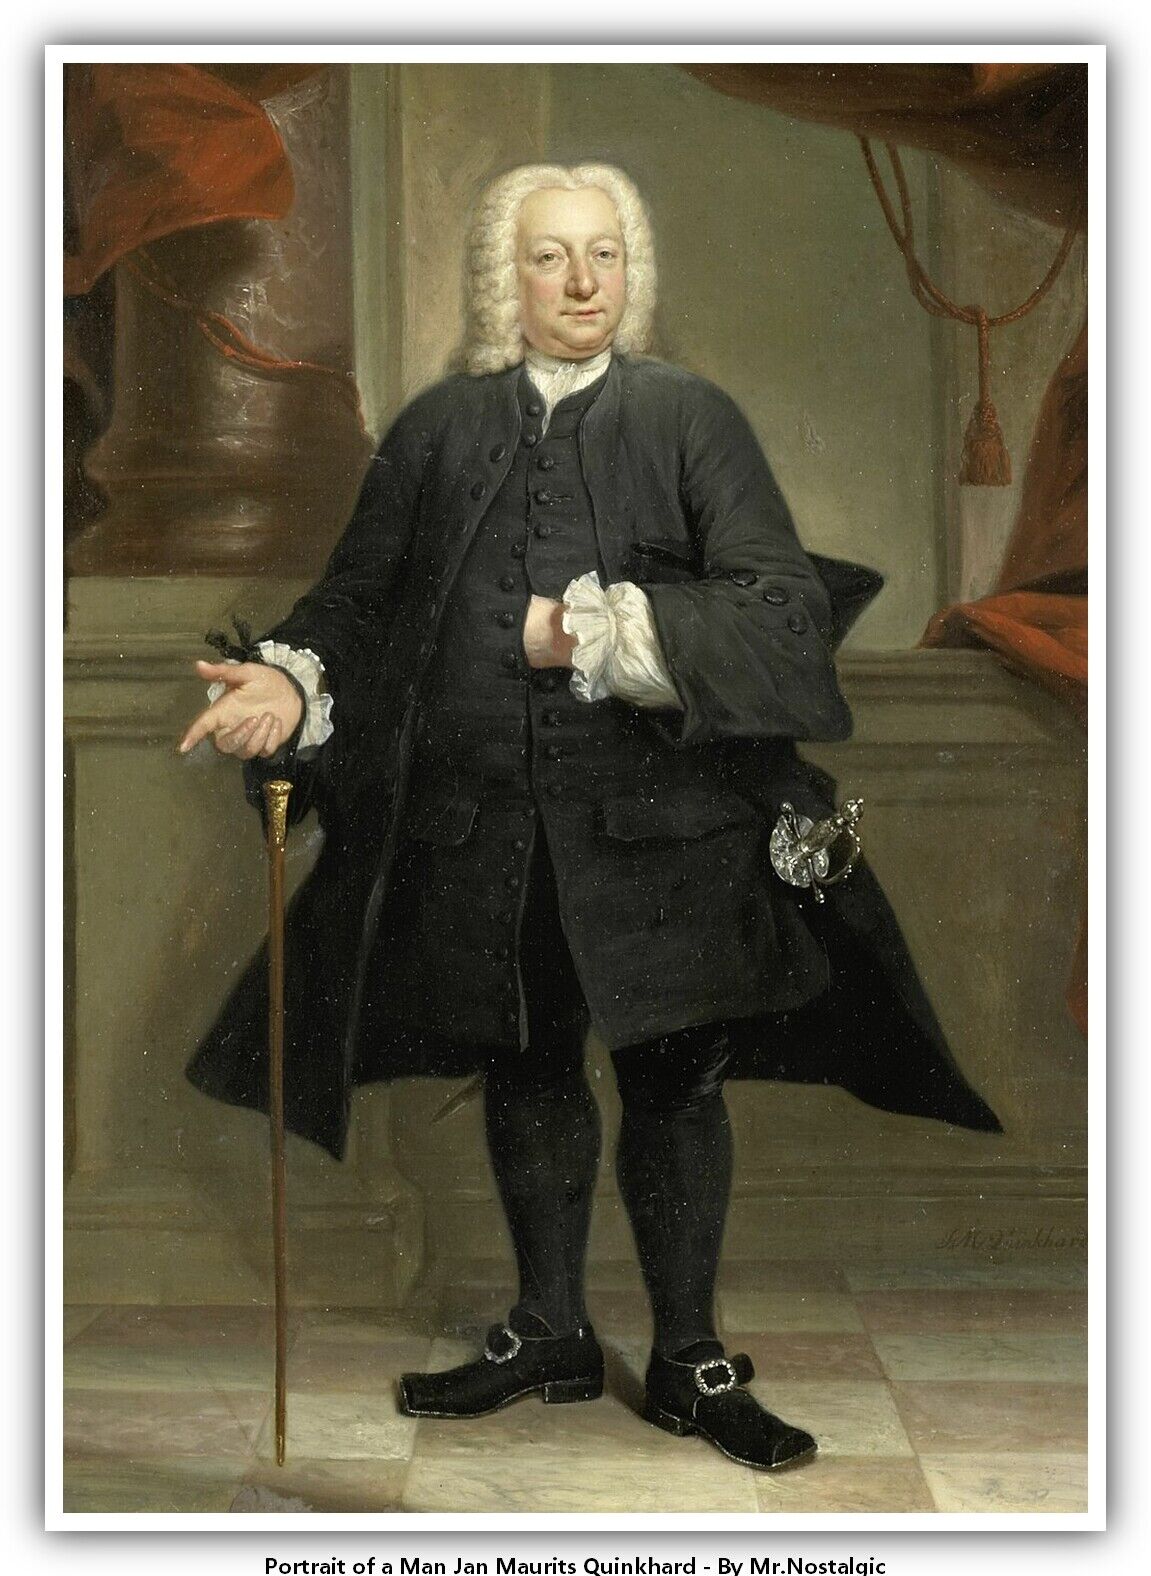 Portrait of a Man Jan Maurits Quinkhard